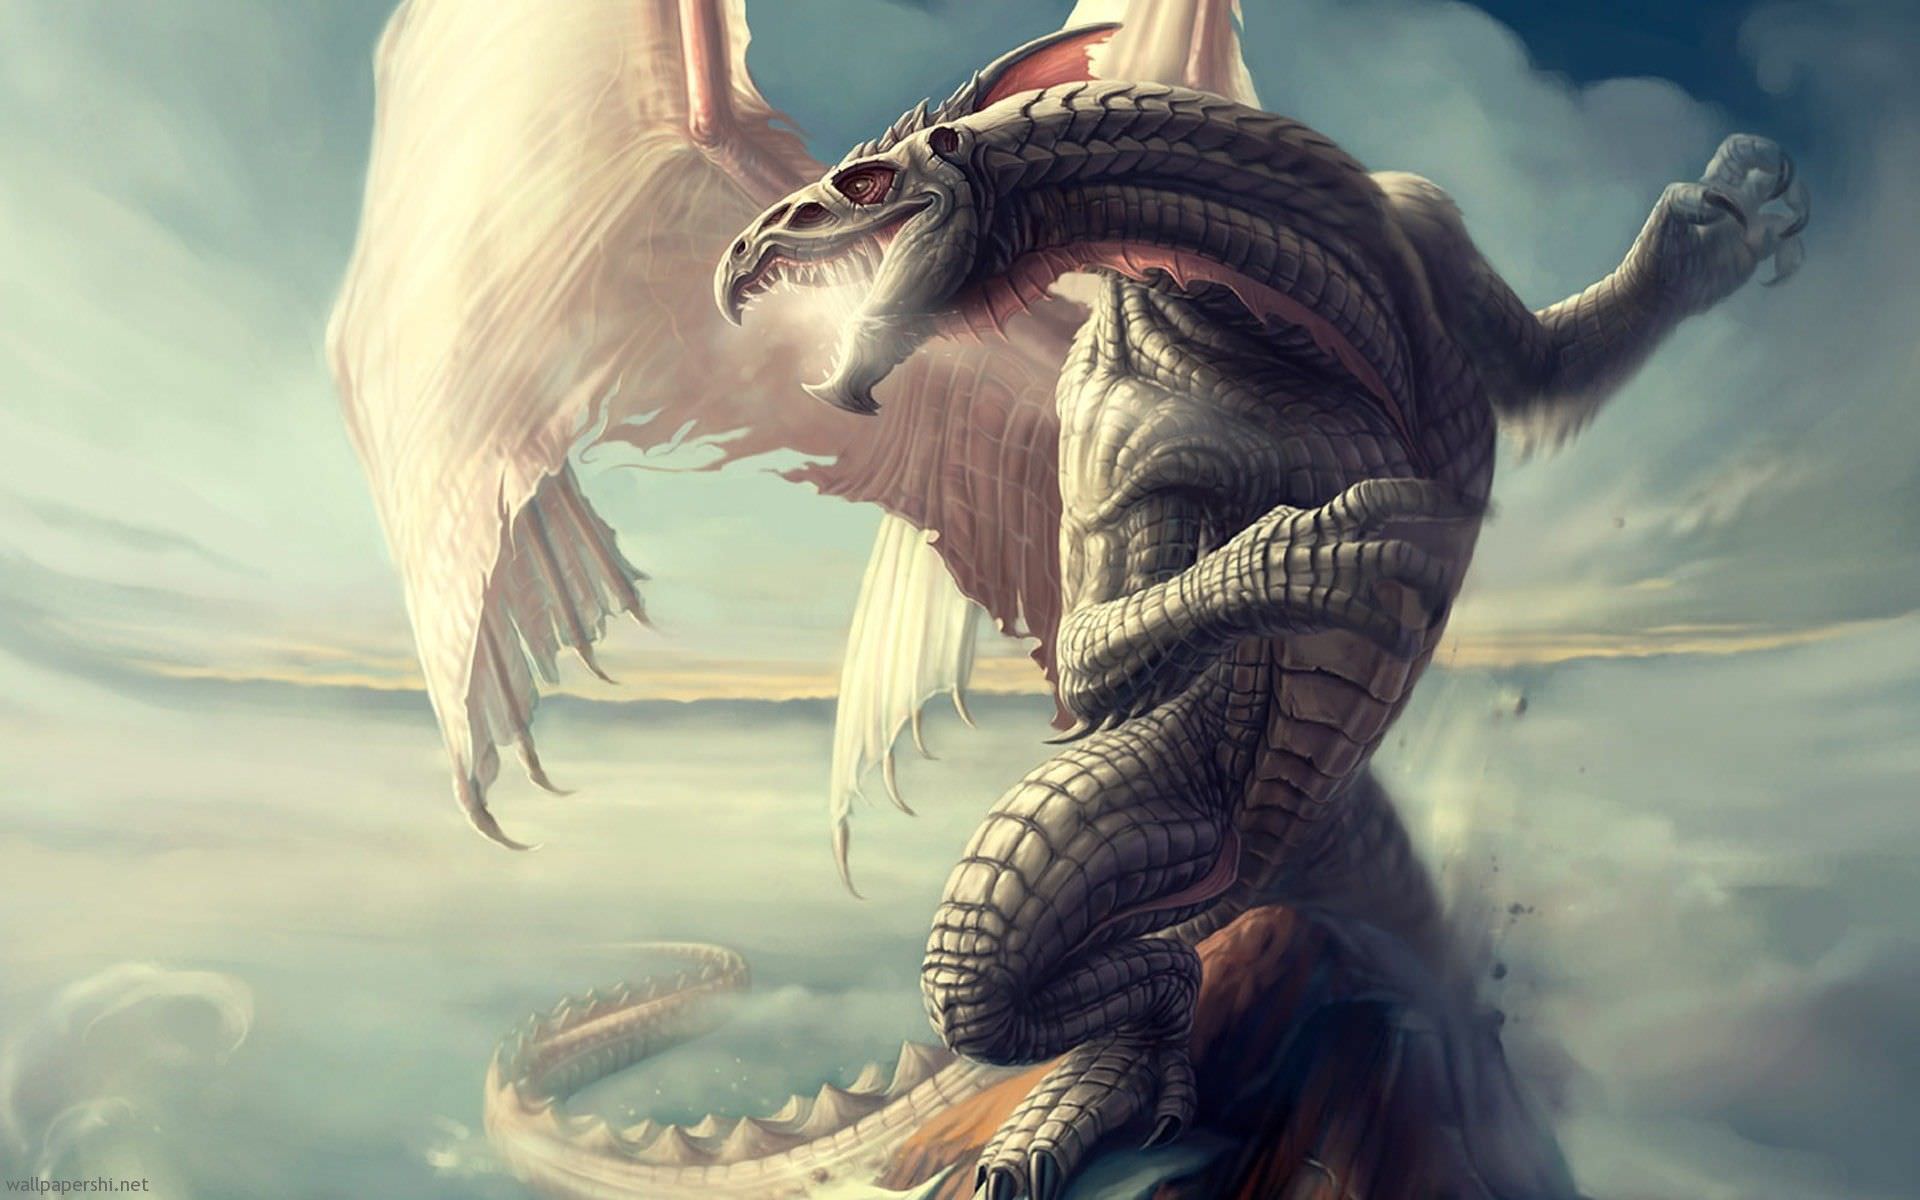 Dragon Wallpaper, Background, Image, Picture. Design